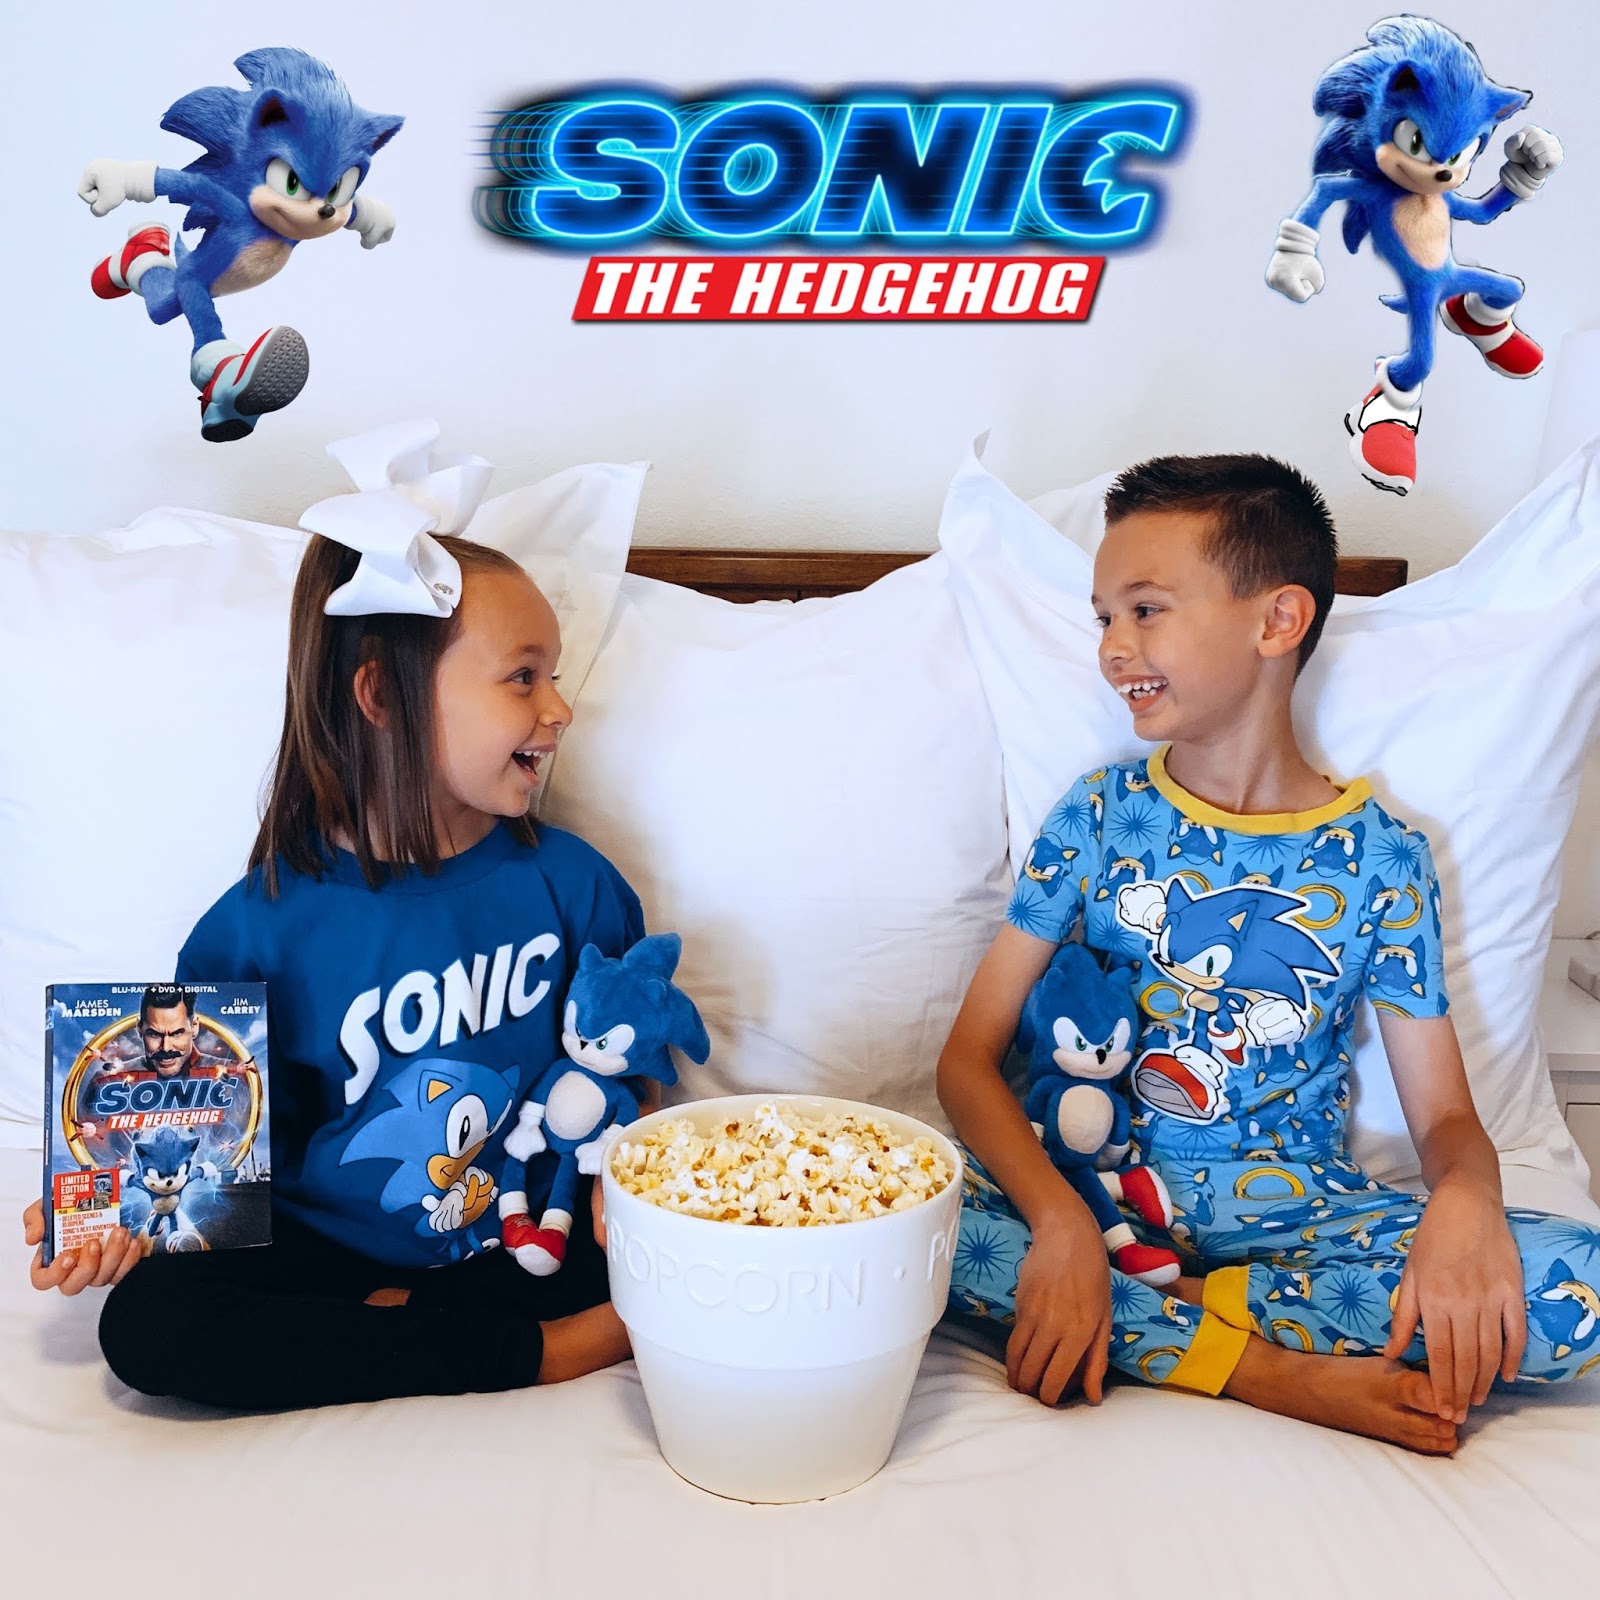 Sonic the Hedgehog 2 4K Blu-ray (4K Ultra HD + Digital 4K)